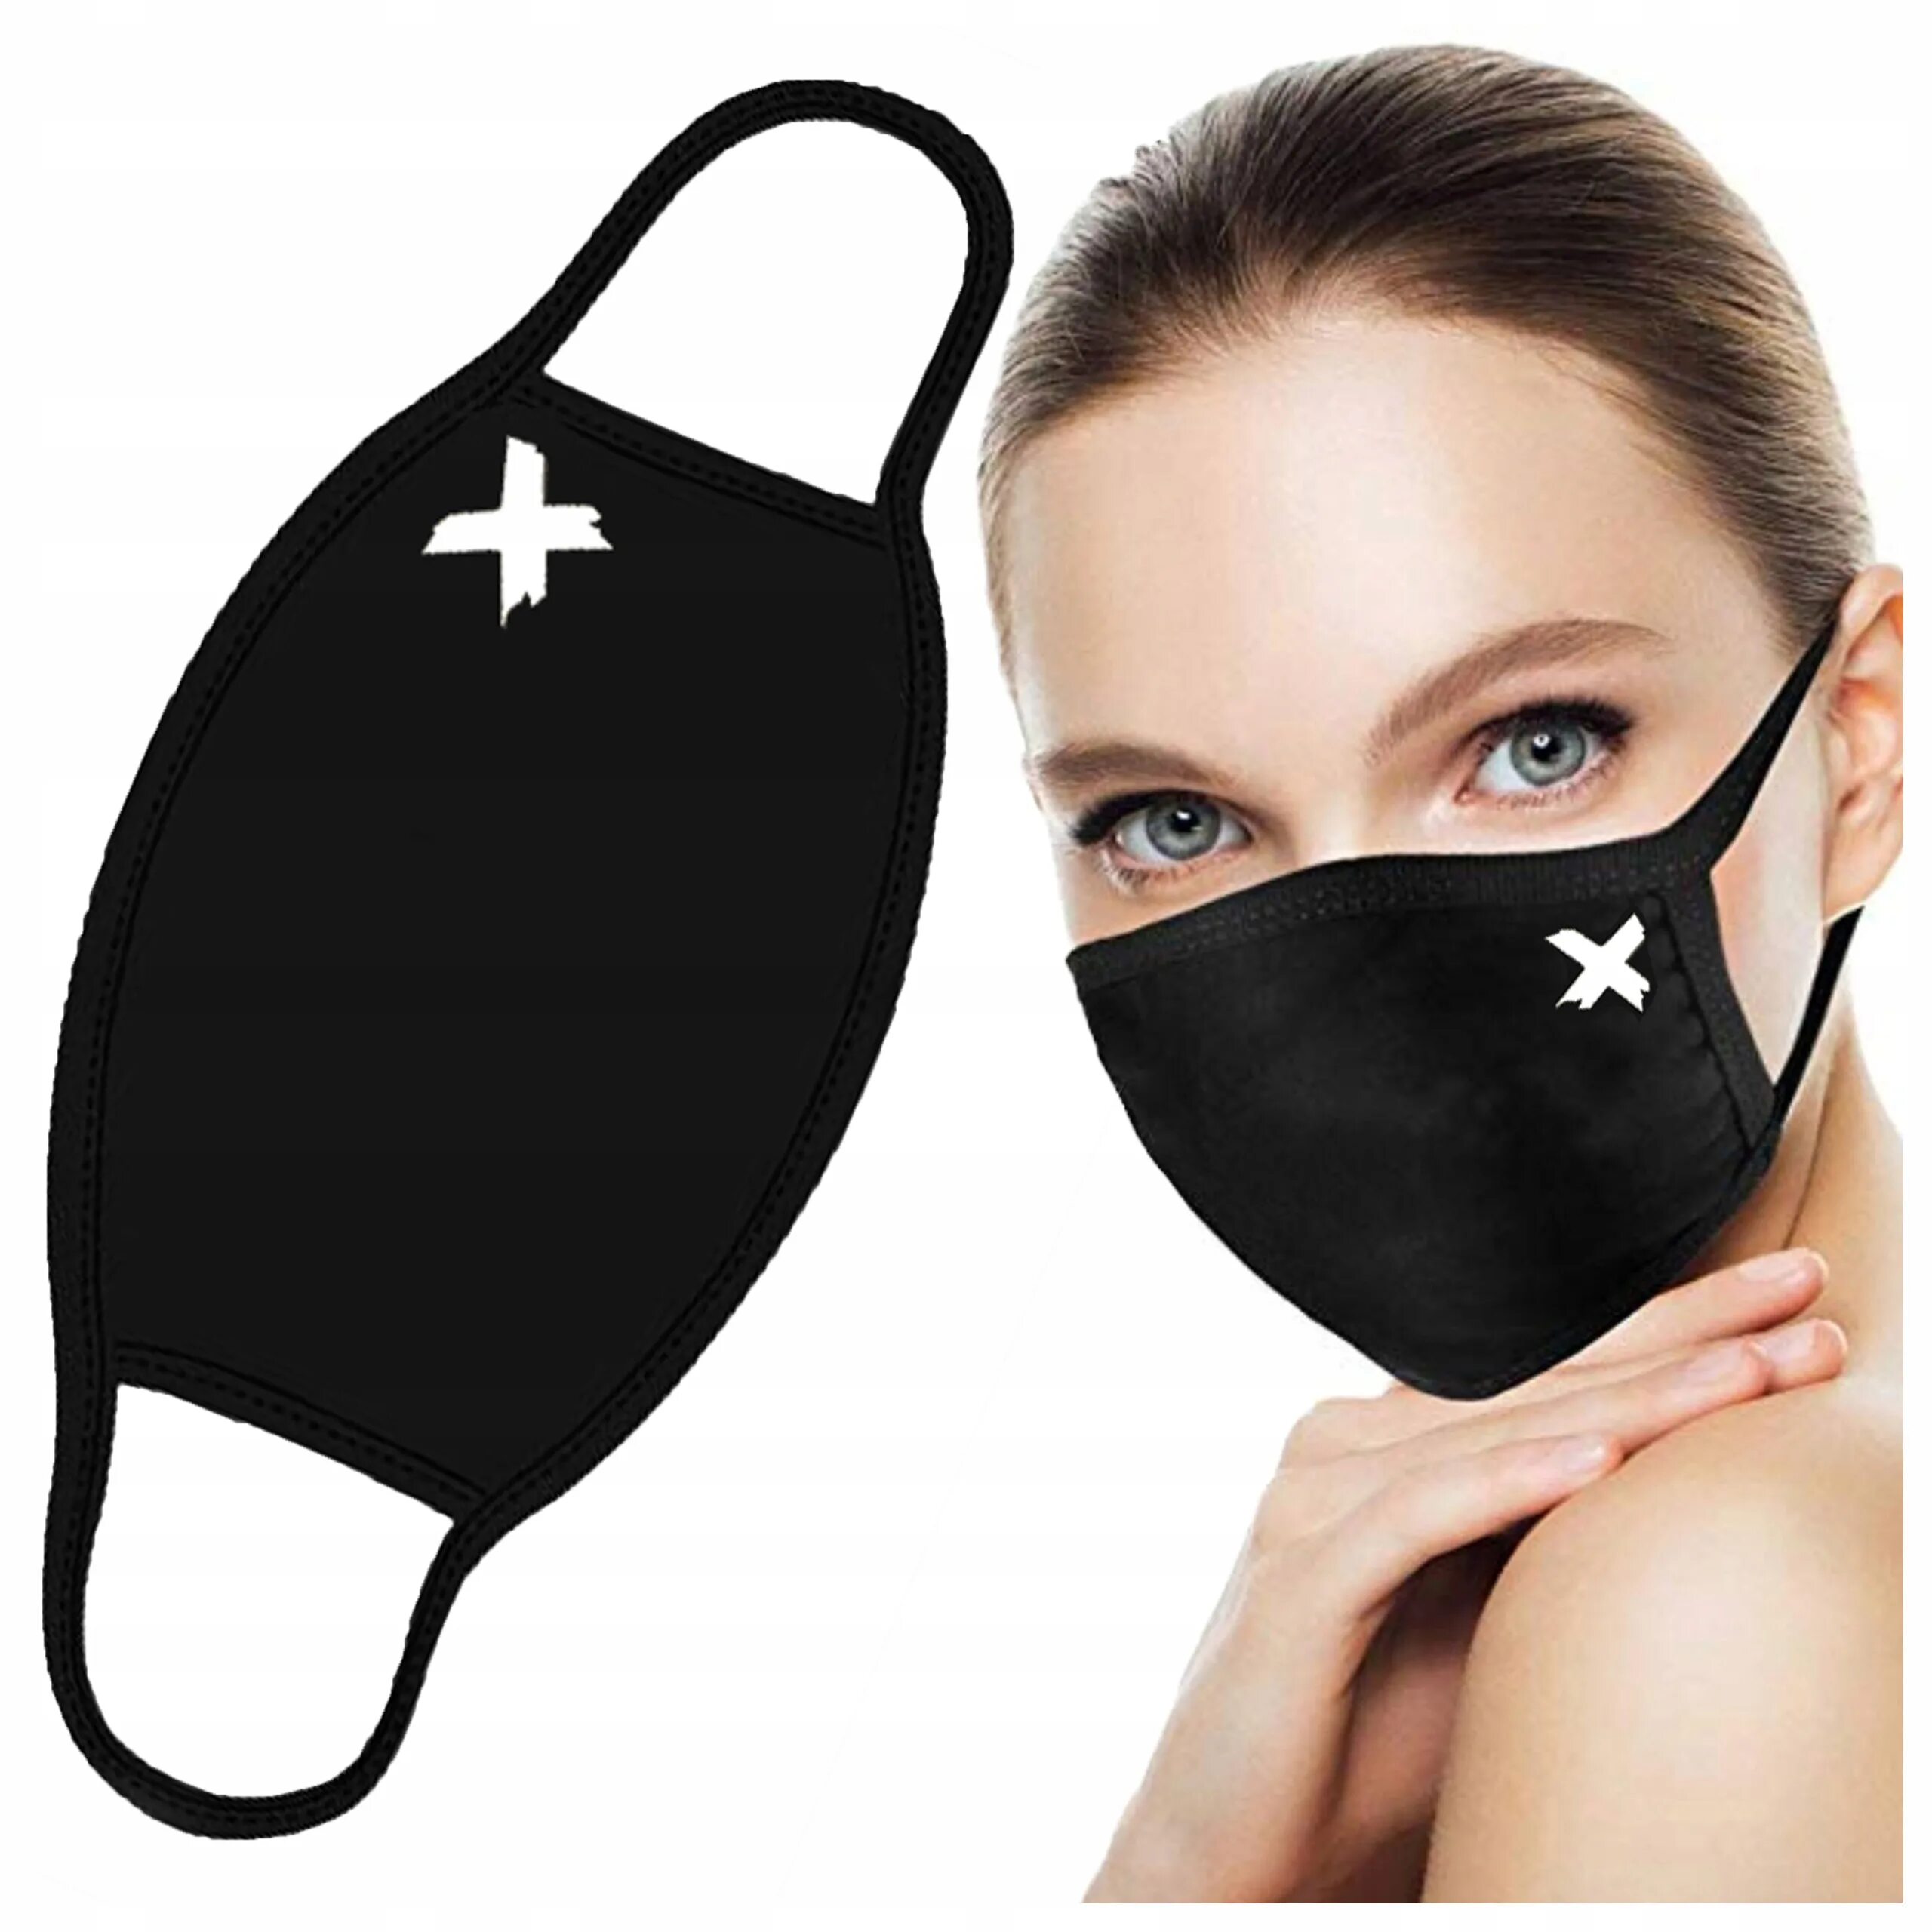 Защитная маска для лица купить. Защитная маска для лица. Маска многоразовая черная. Маска многоразовая для лица. Маска для лица защитная многоразовая.